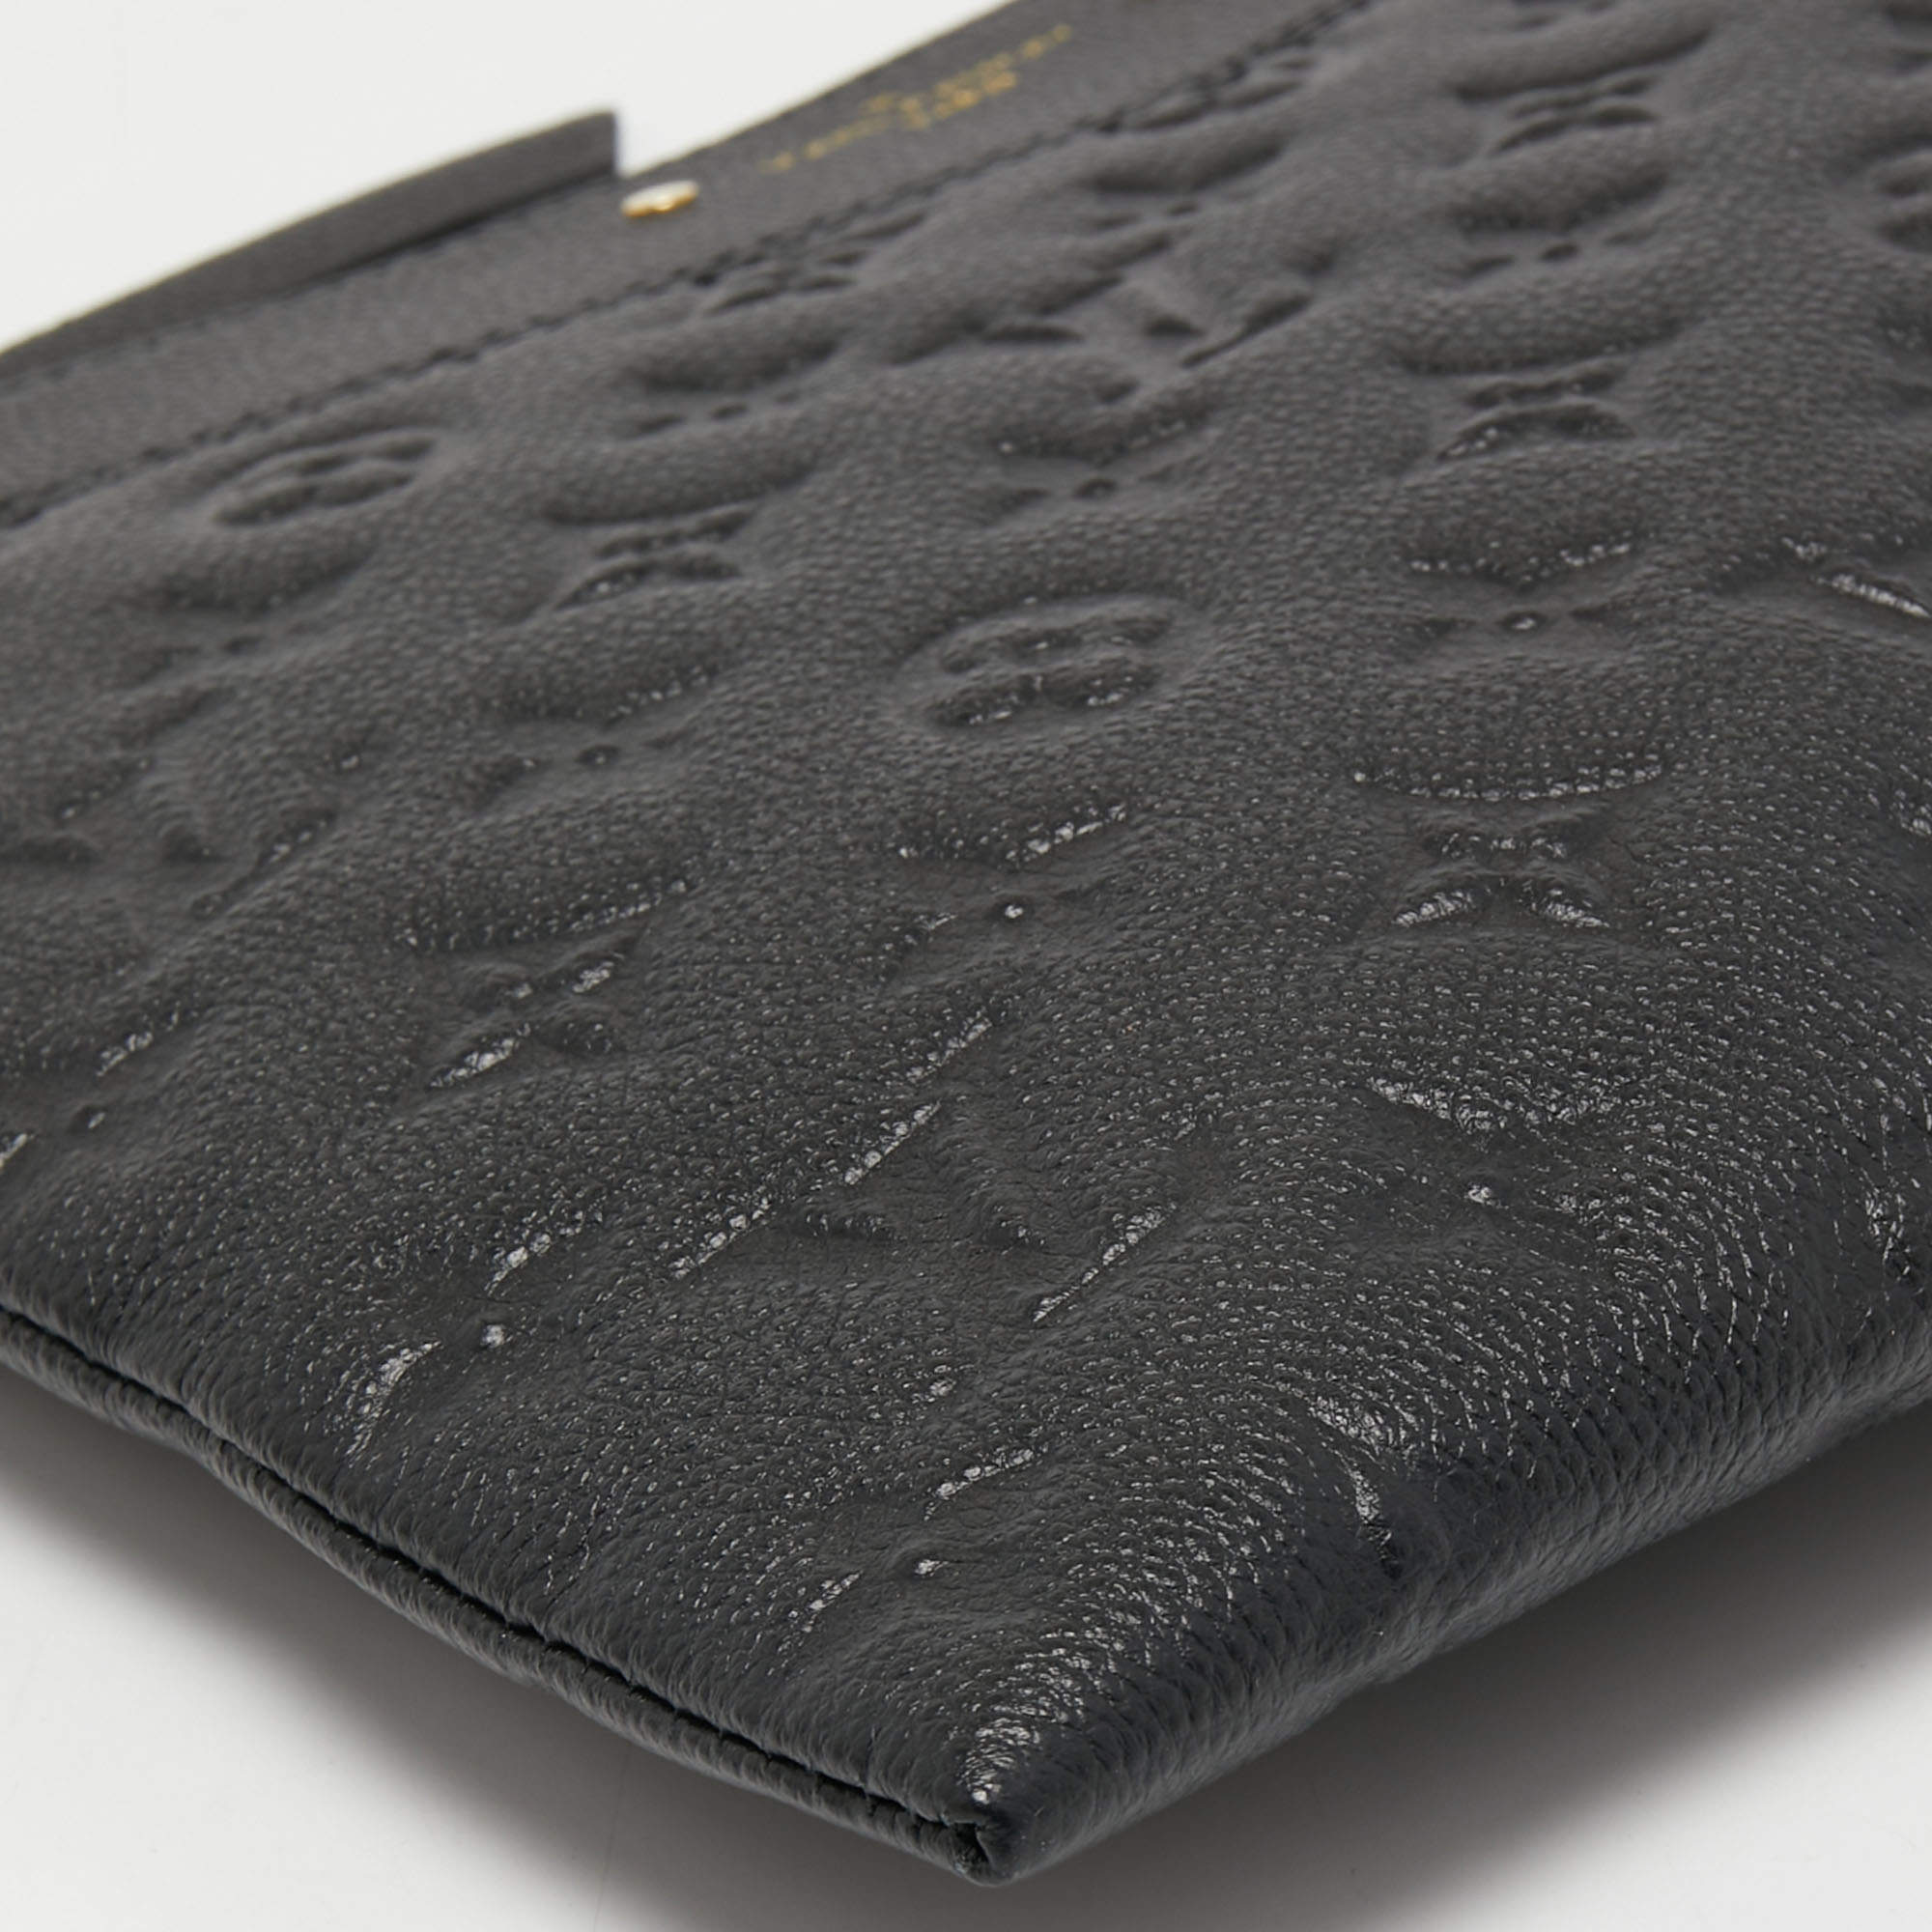 Louis Vuitton Black Monogram Empreinte Leather Daily Pouch Louis Vuitton